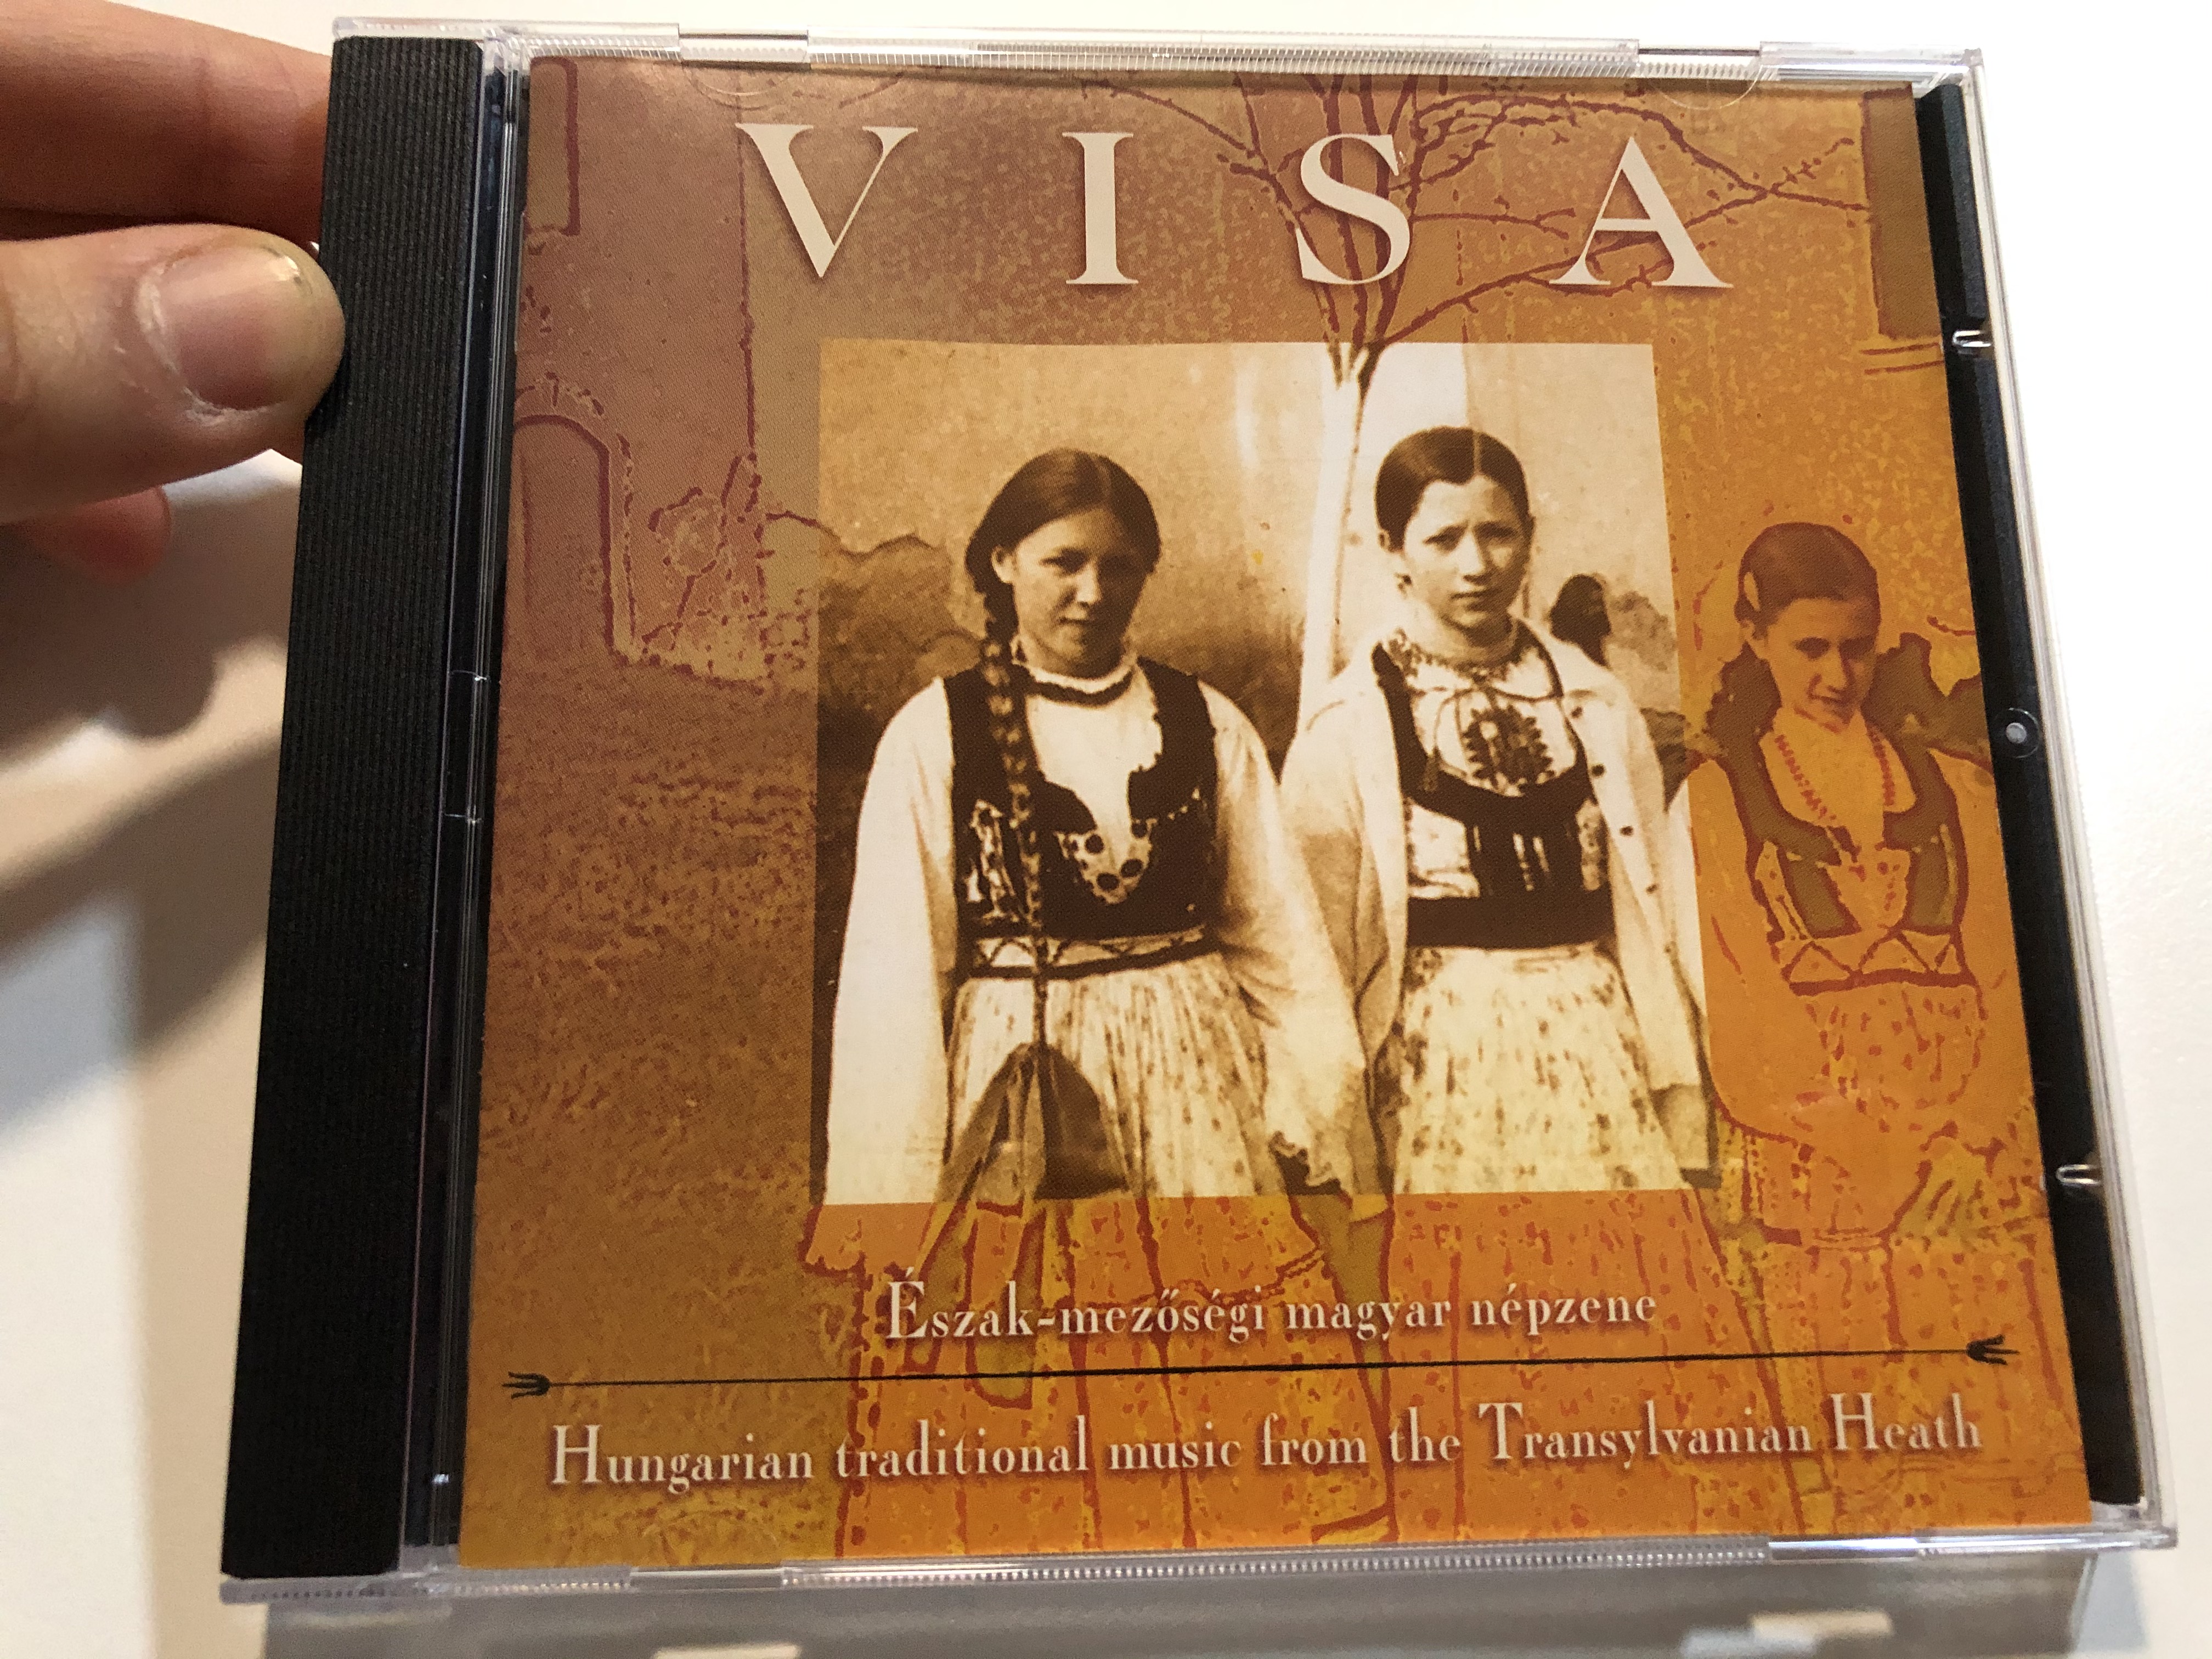 visa-szak-mez-s-gi-magyar-n-pzene-hungarian-traditional-music-from-the-transylvanian-heath-fon-records-audio-cd-2001-fa-092-2-1-.jpg